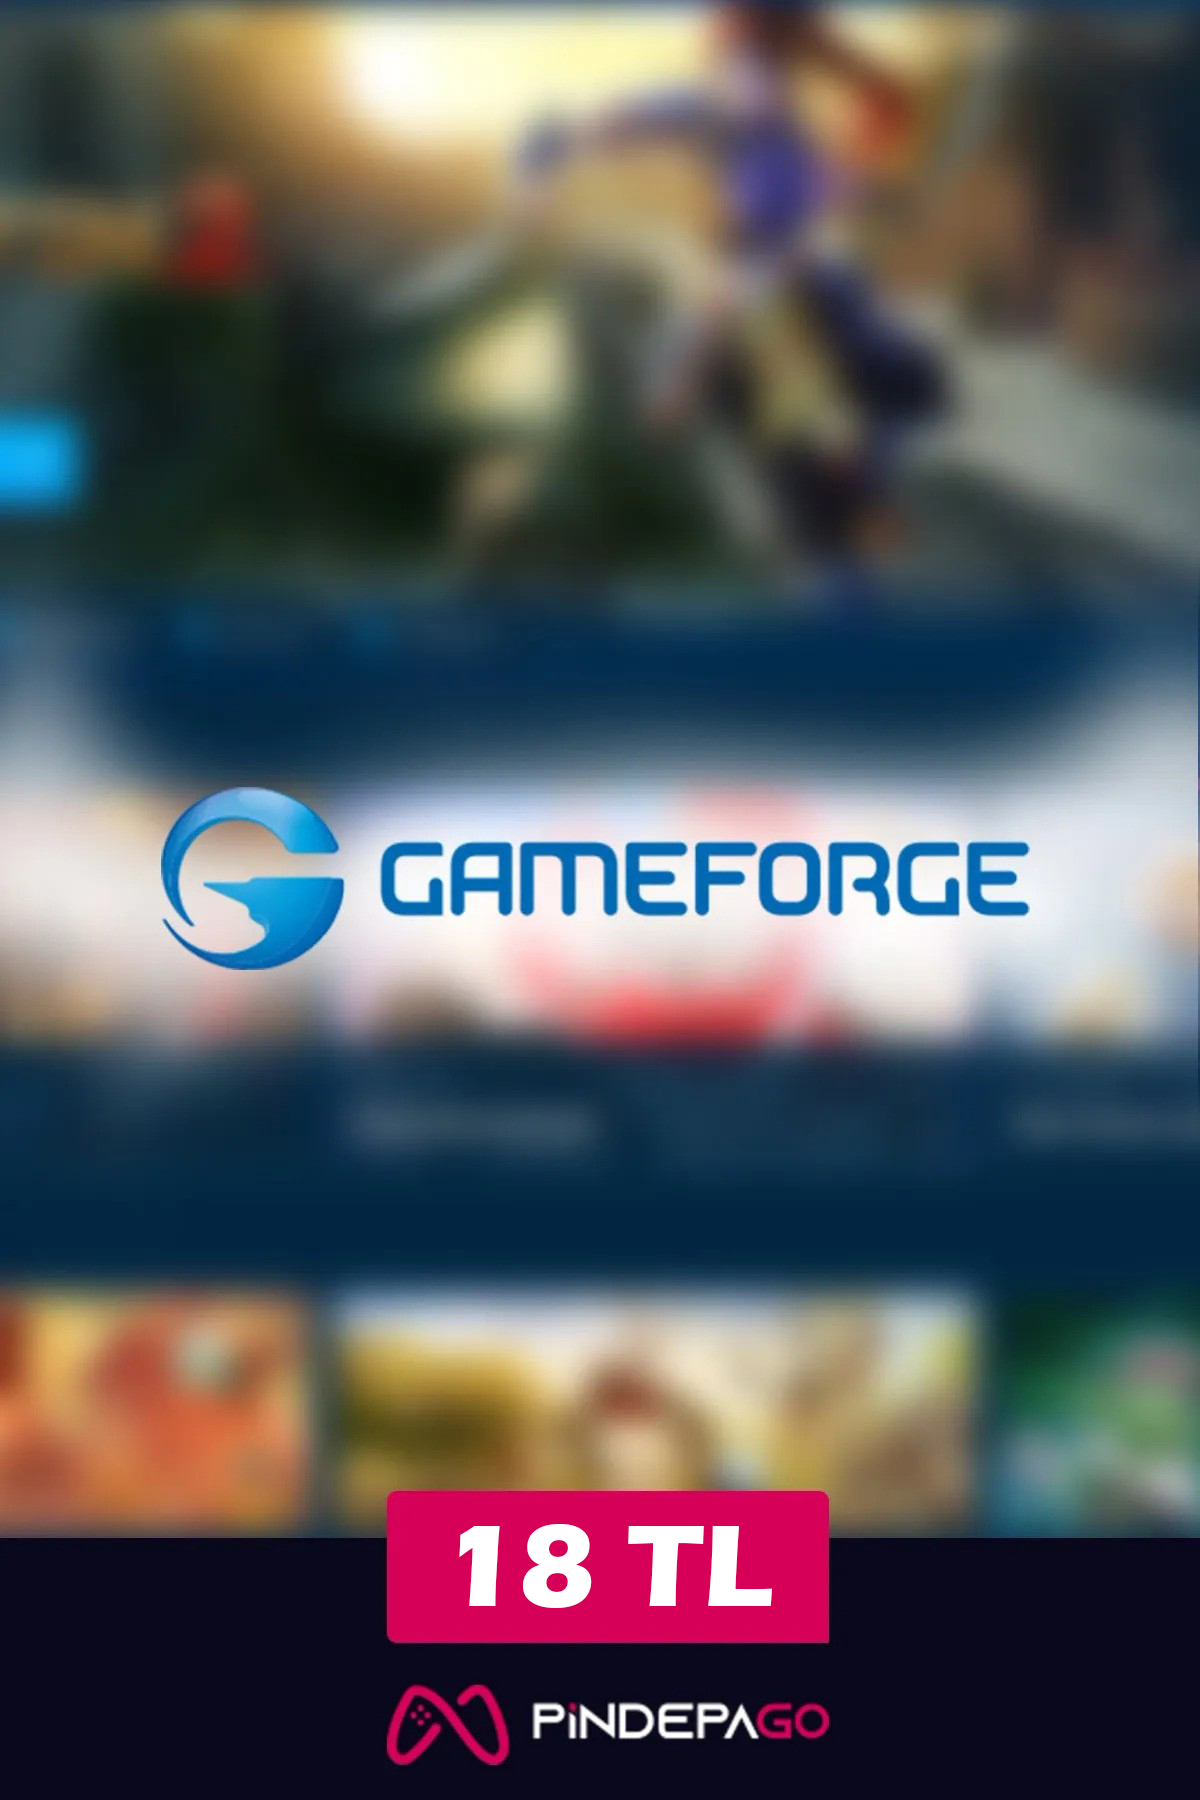 Gameforge 18 TL